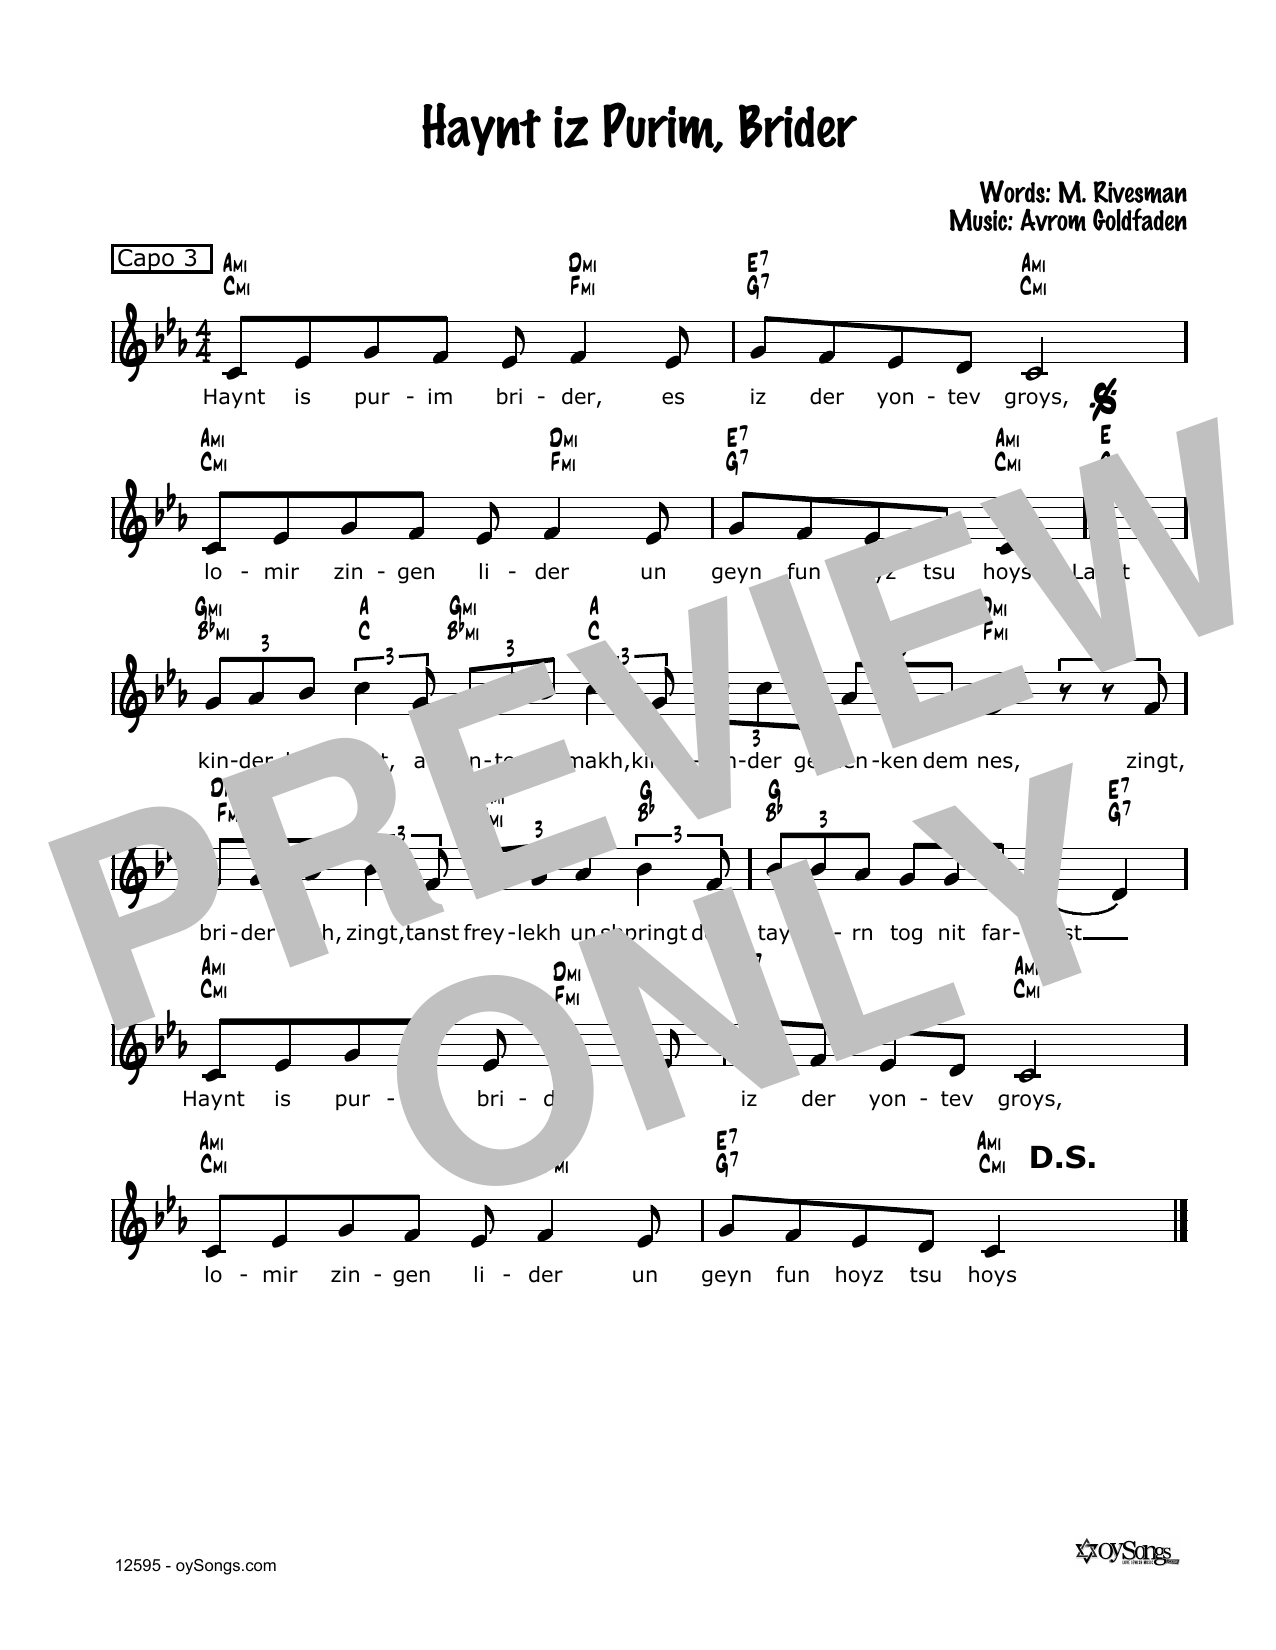 Avrom Goldfaden Haynt Iz Purim, Brider Sheet Music Notes & Chords for Melody Line, Lyrics & Chords - Download or Print PDF